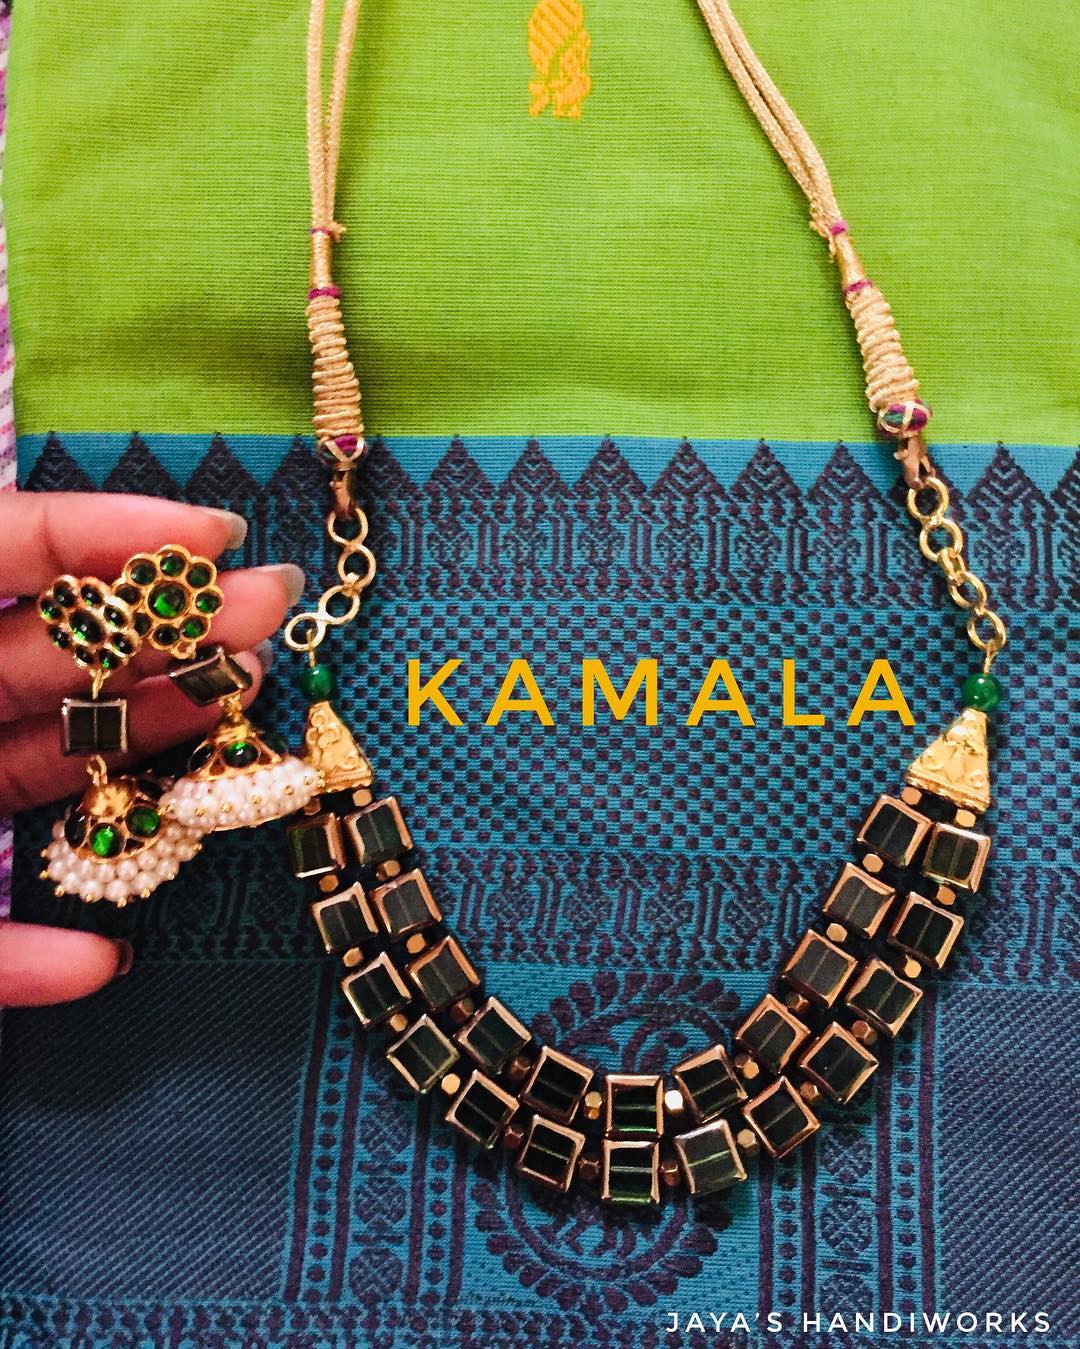 latest traditioal temple jewellery sets